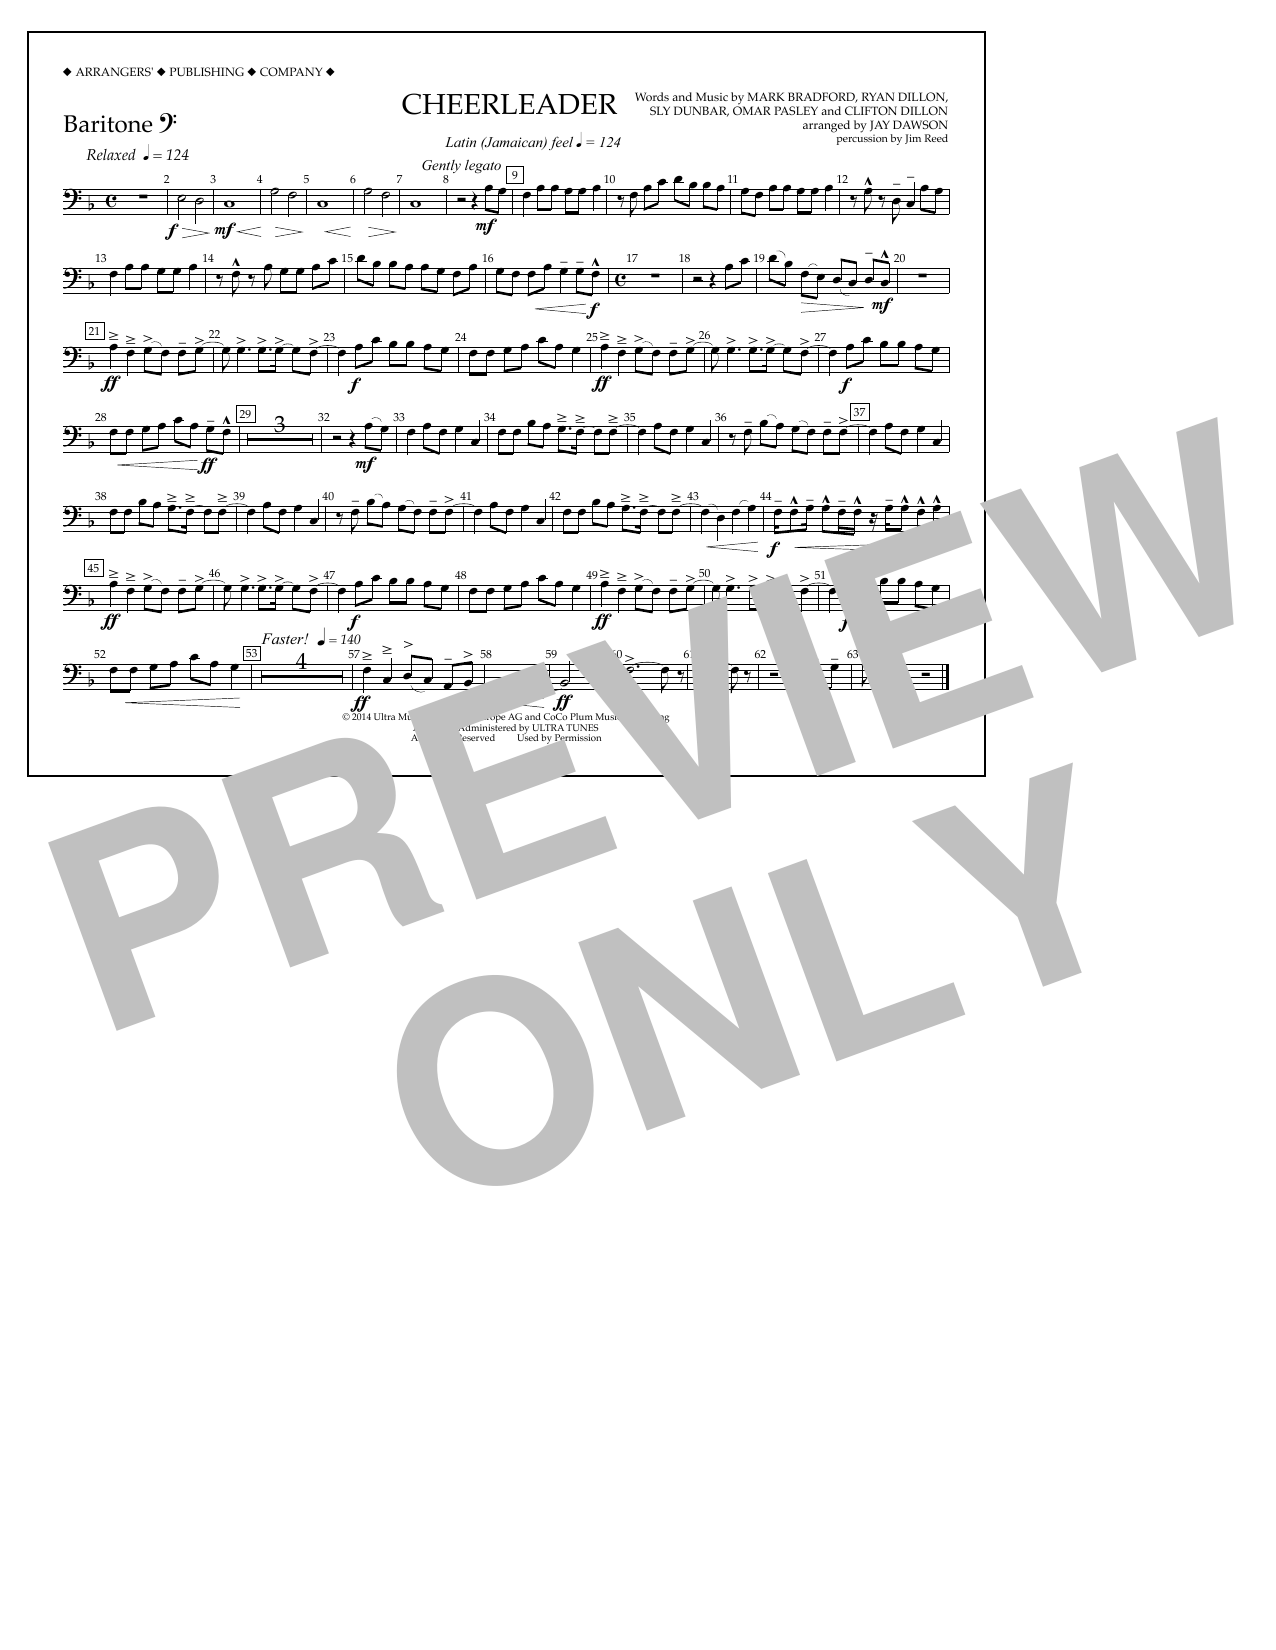 Jay Dawson Cheerleader - Baritone B.C. Sheet Music Notes & Chords for Marching Band - Download or Print PDF